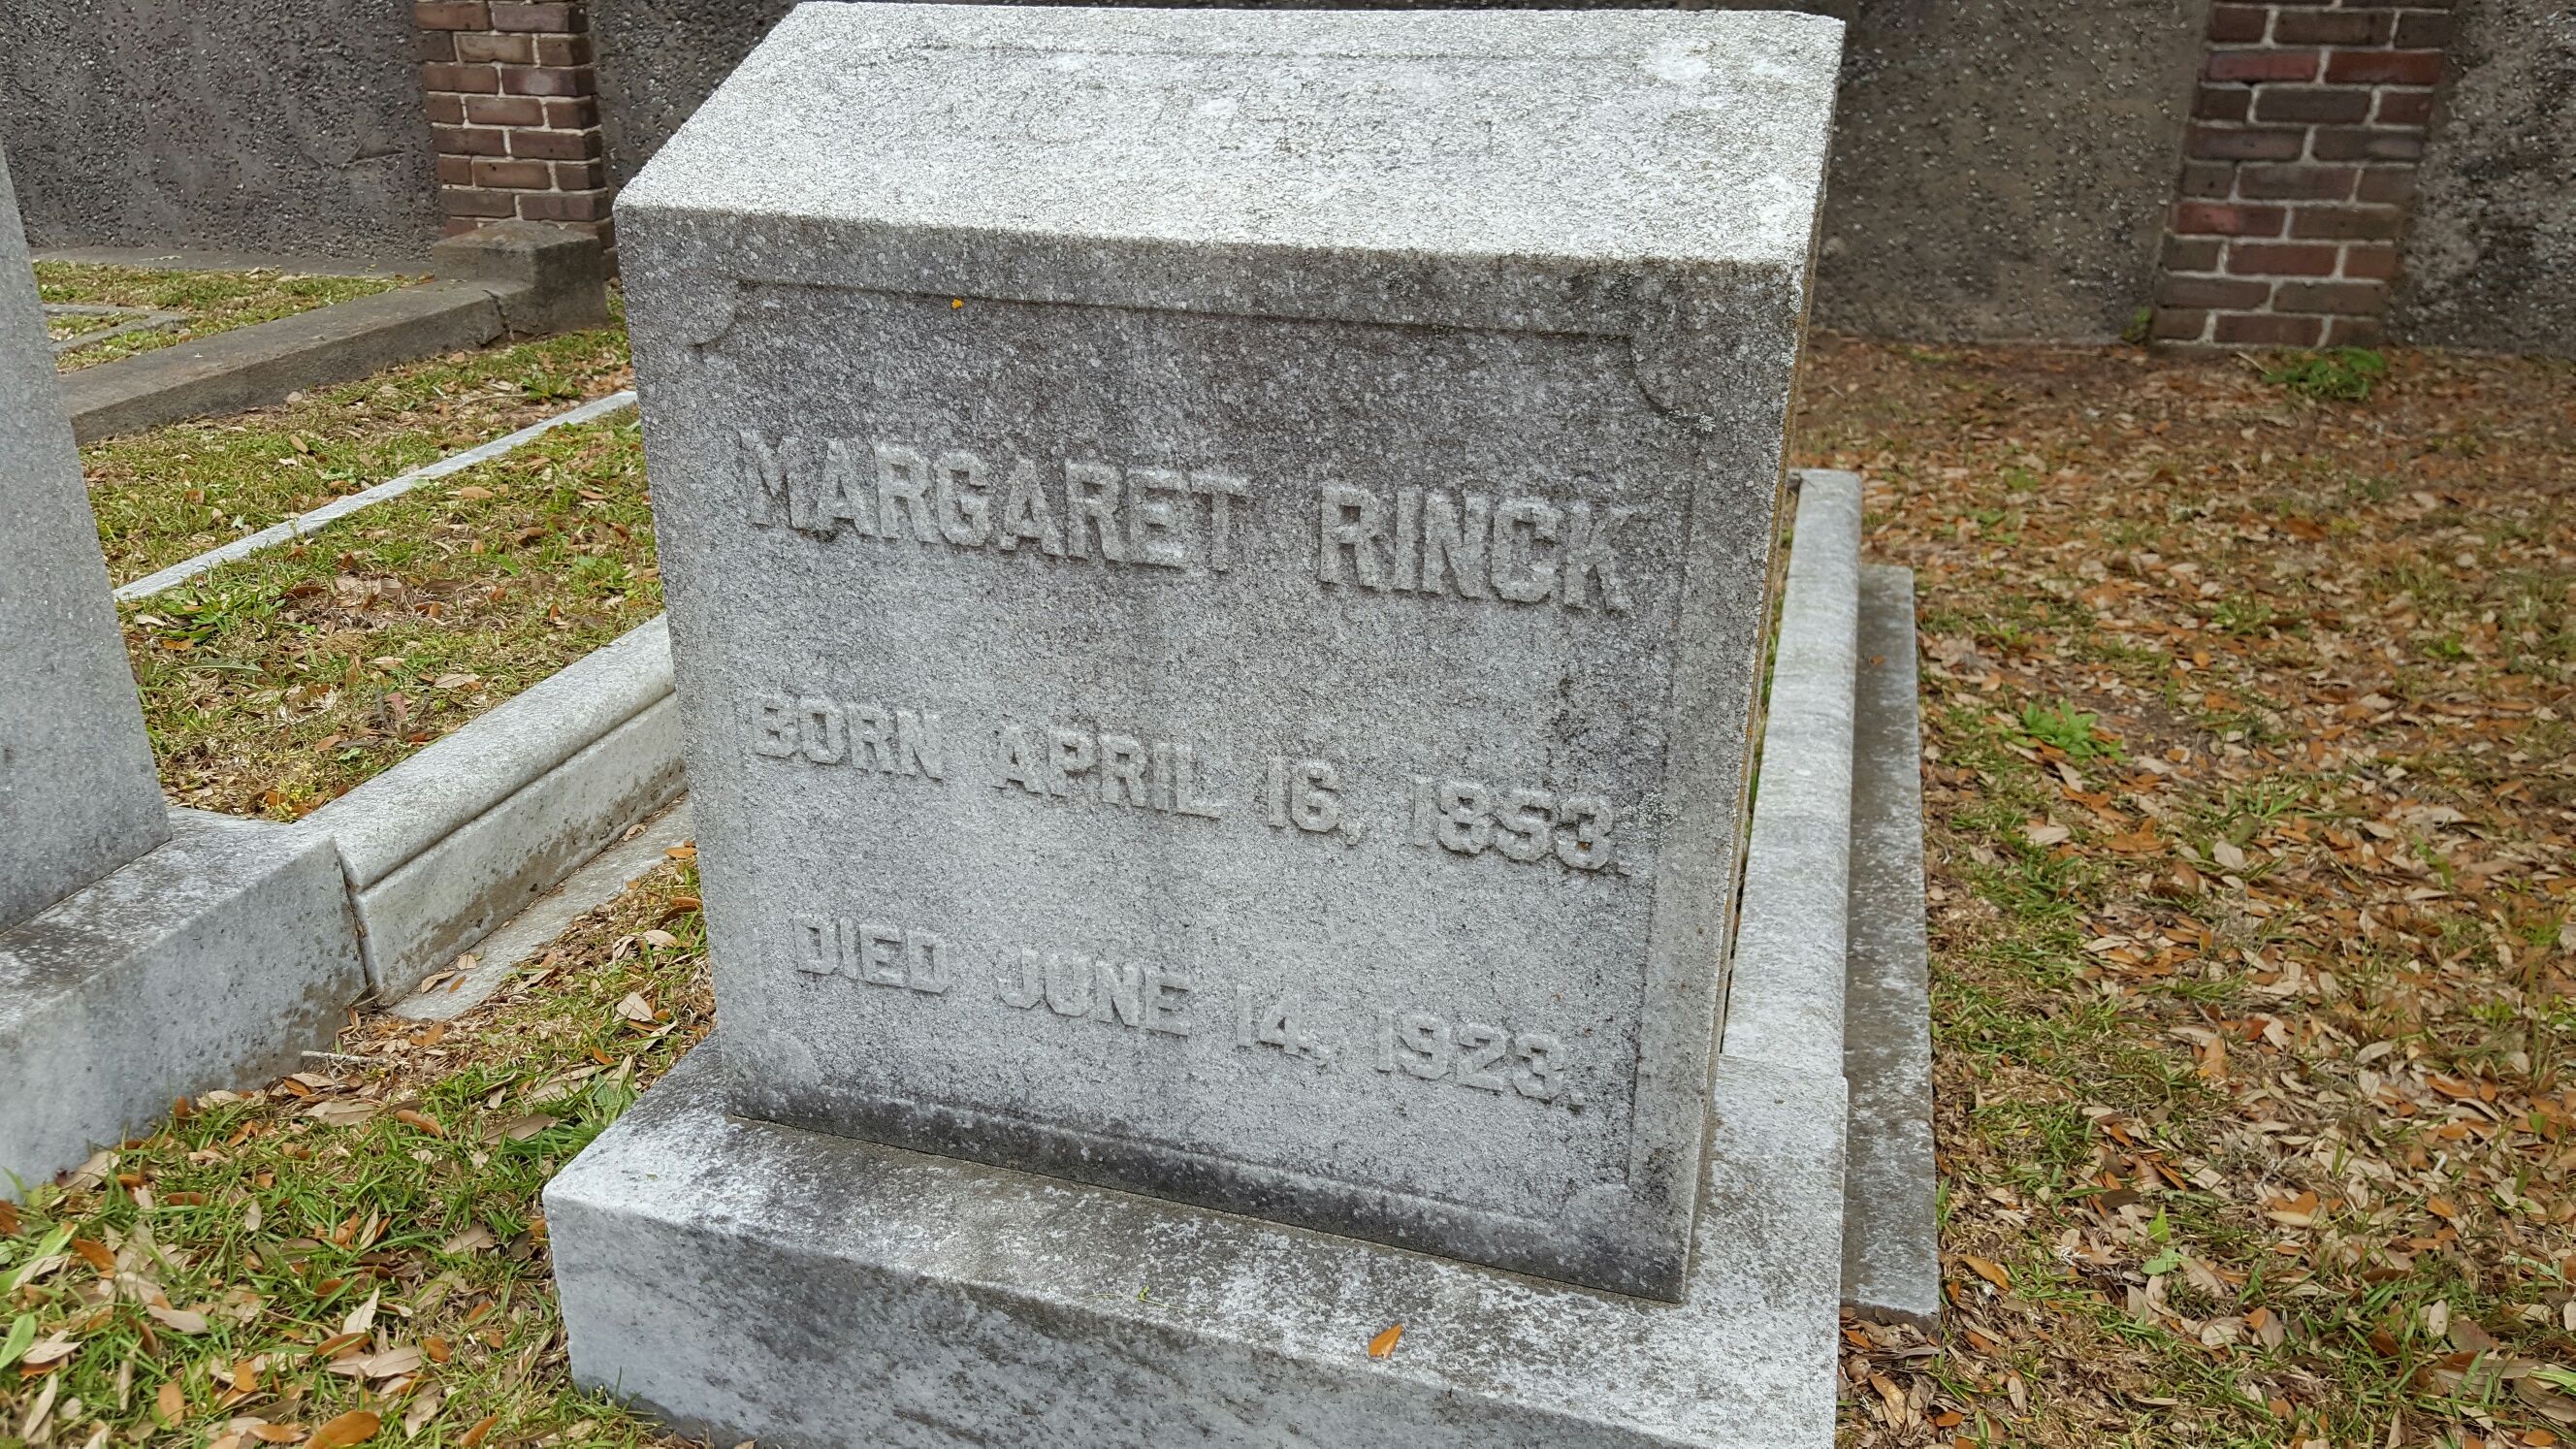 Margaret Rinck headstone, Bethany Cemetery, Charleston SC